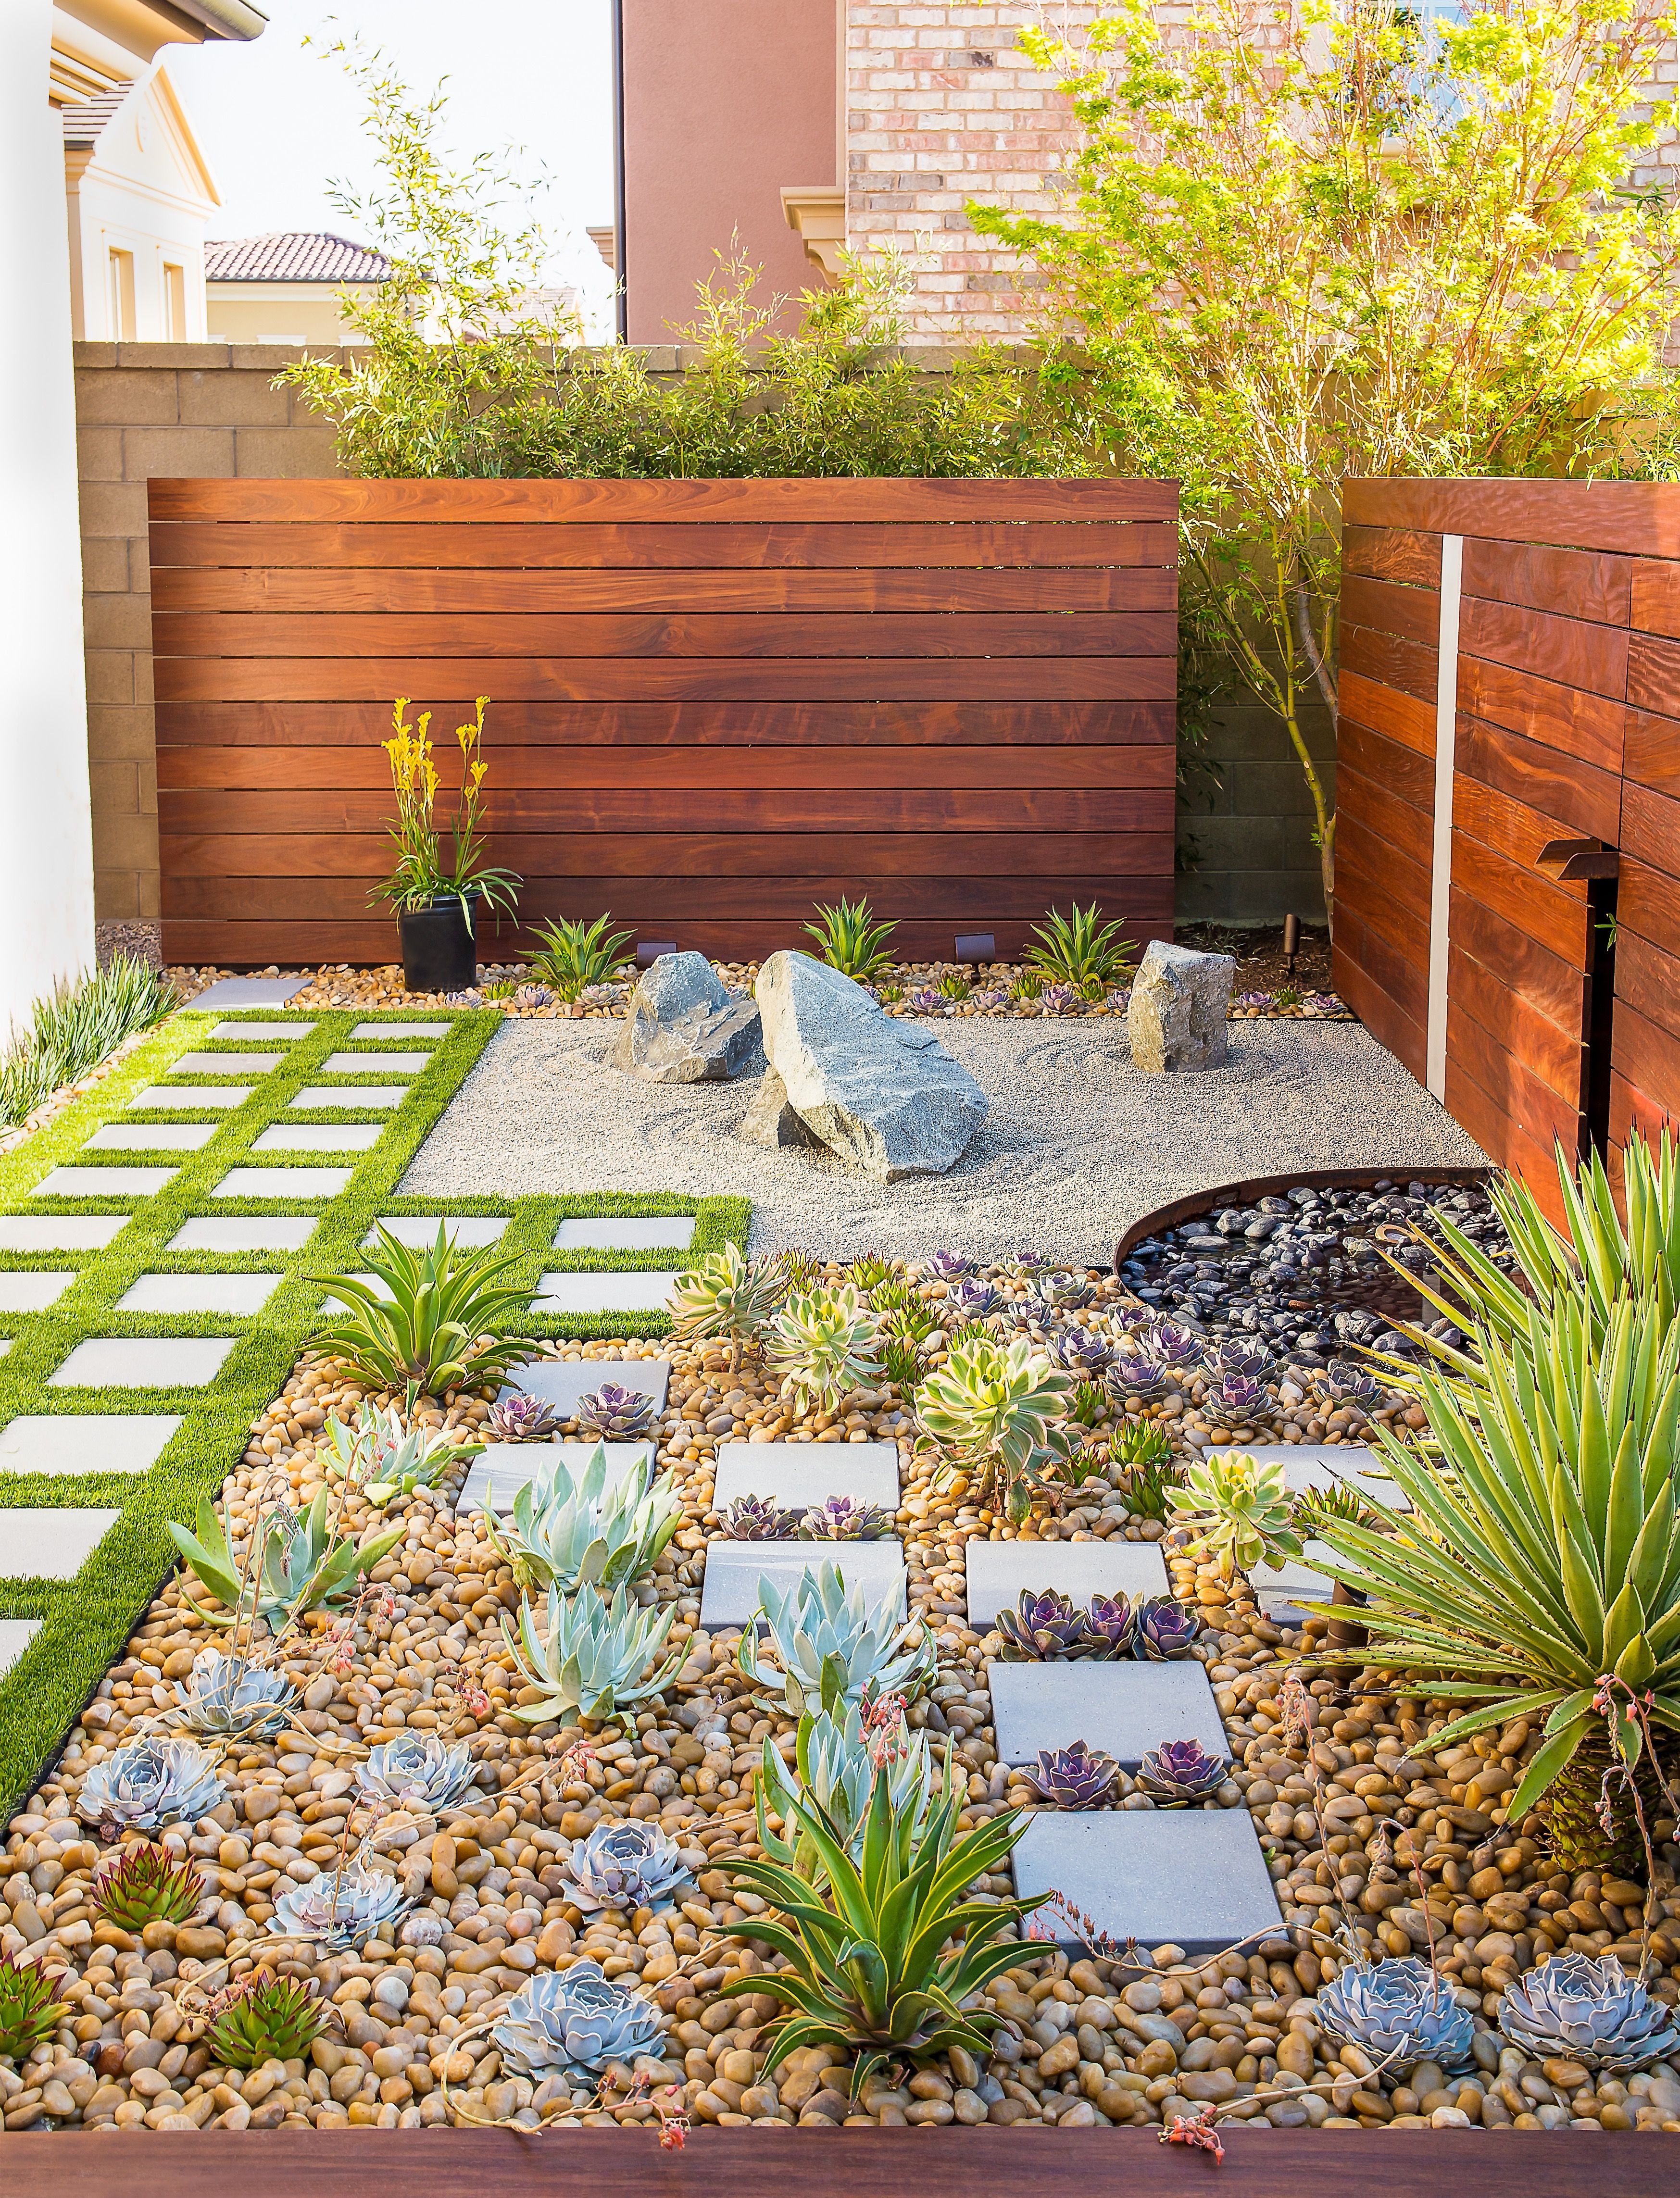 Modern Tropical Zen Backyard With Rock Garden In MInimalist Design (View 21 of 30)